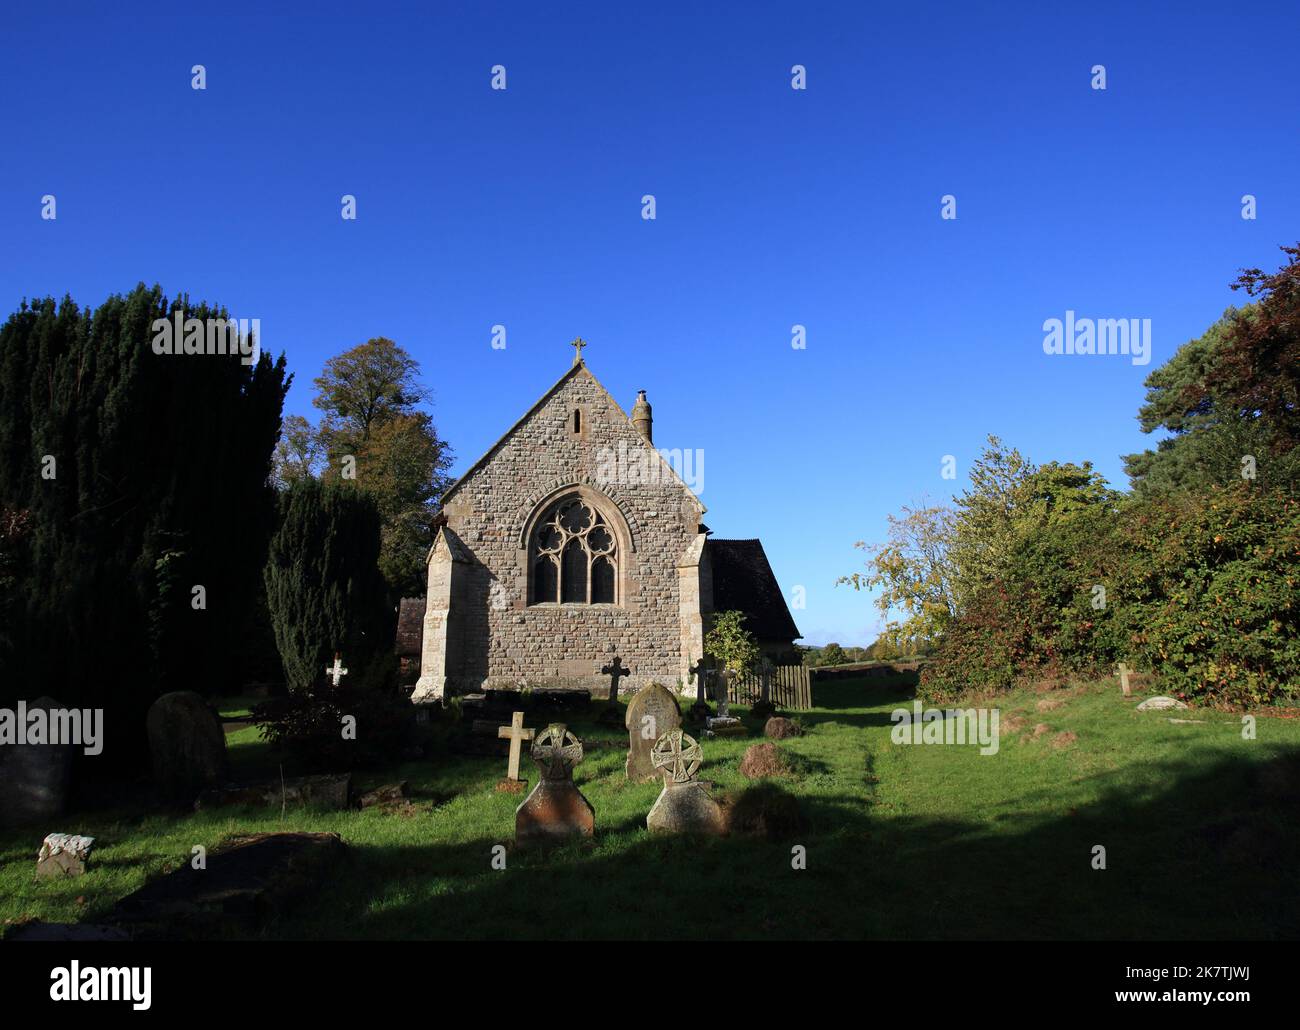 The church of Saint Mary, Caynham, Shropshire, England, UK. Stock Photo